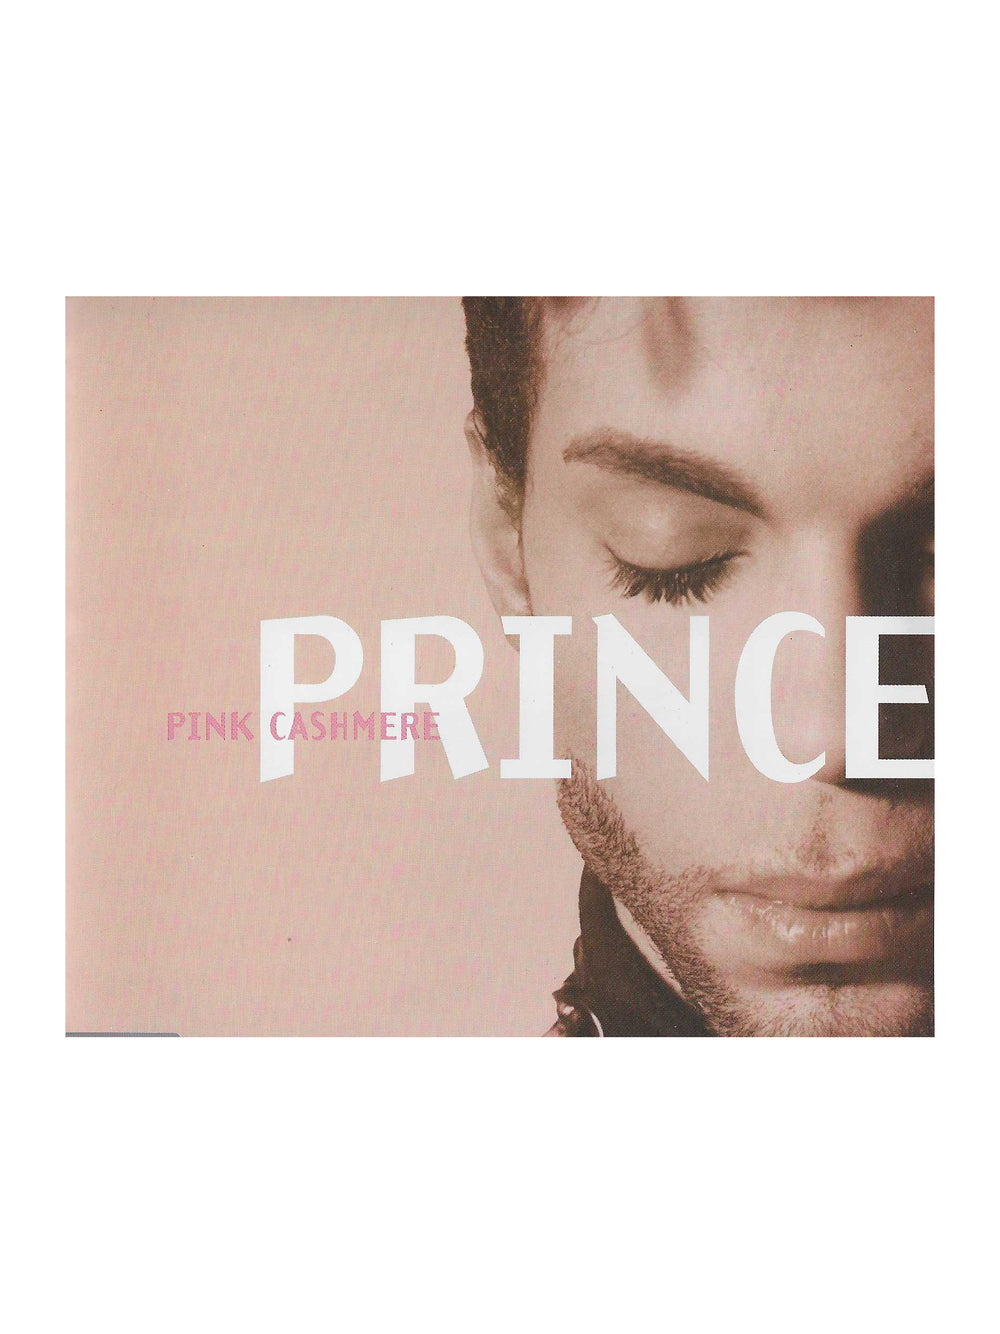 Prince – Pink Cashmere CD Compact Disc Single UK / EU Release WE 739